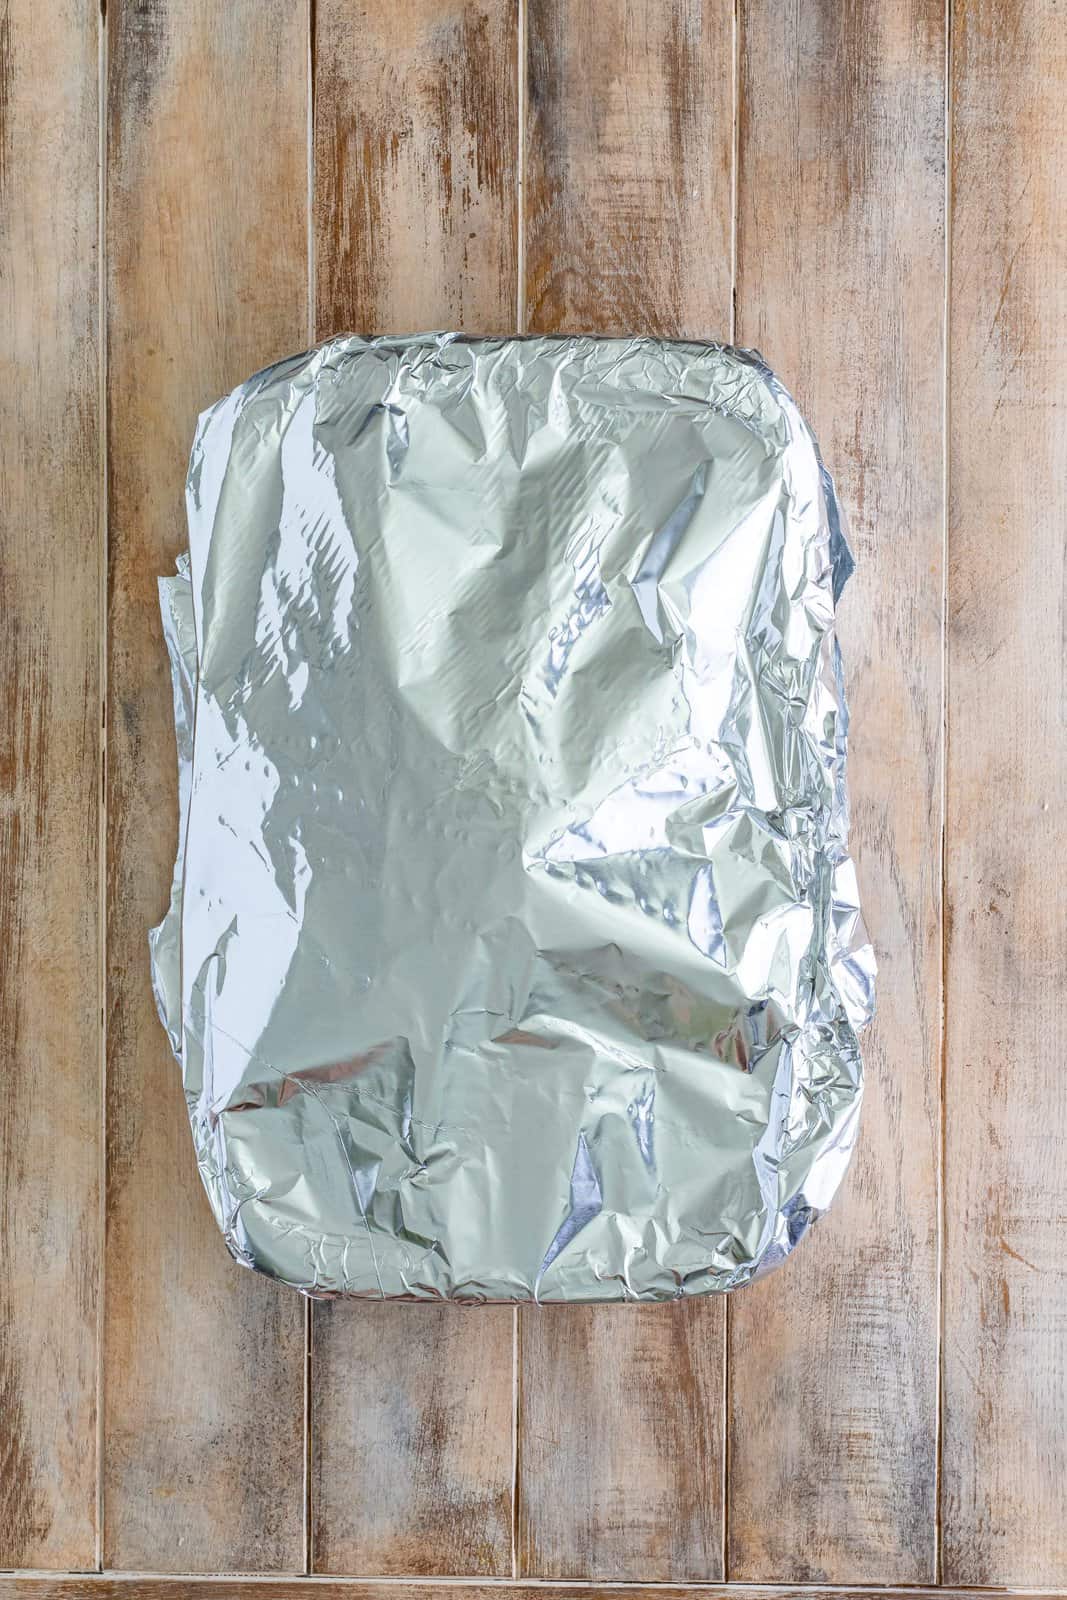 an aluminum foil covered baking dish. 